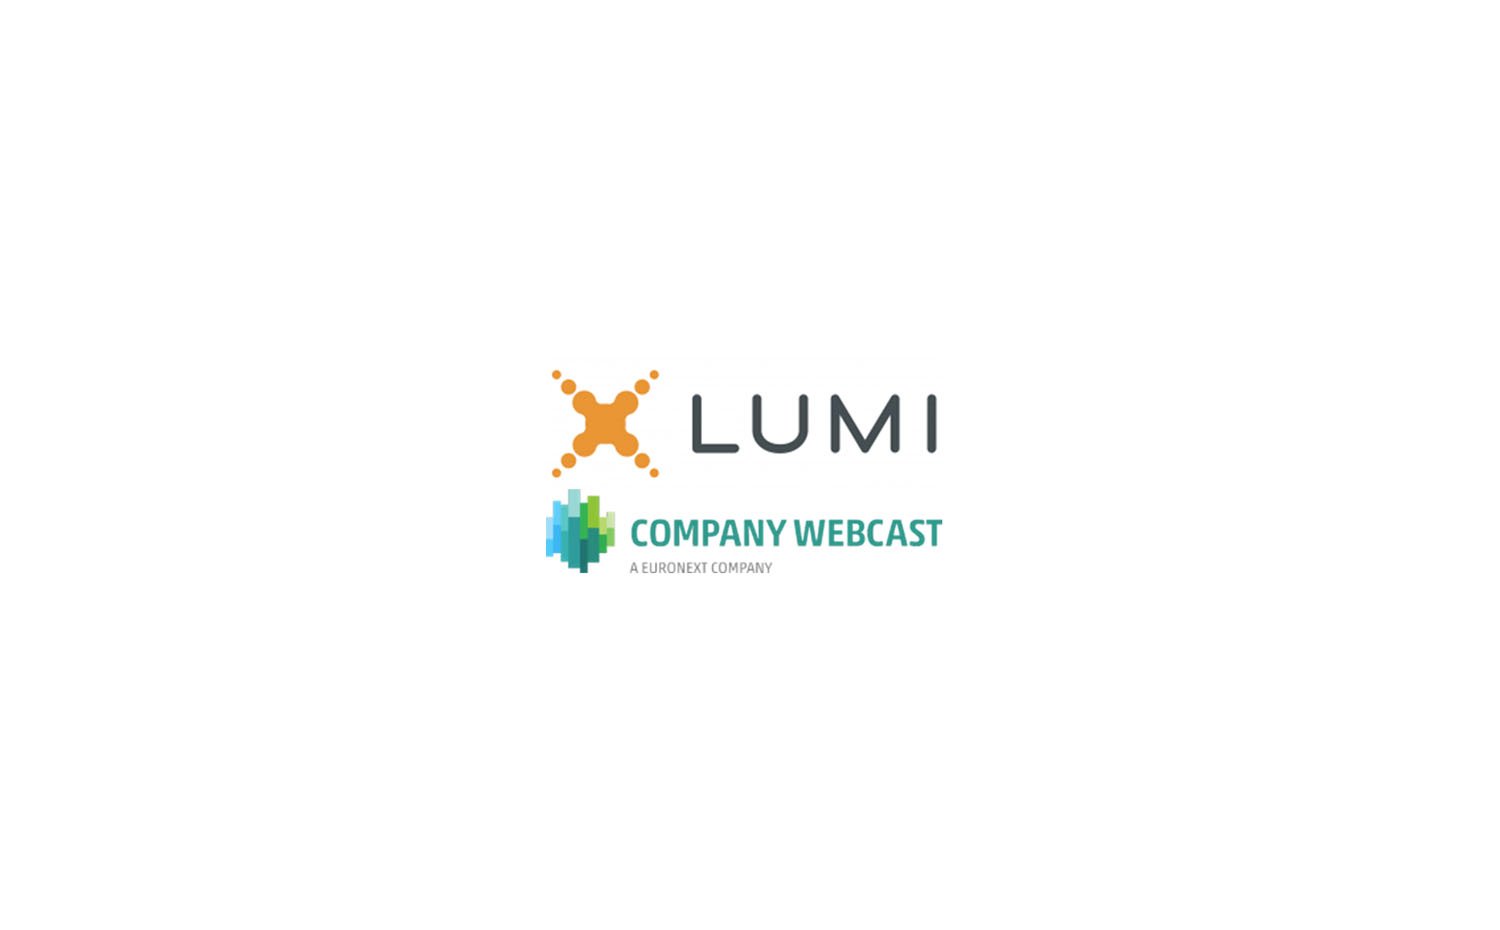 Lumi and Company Webcast enter a reseller partnership